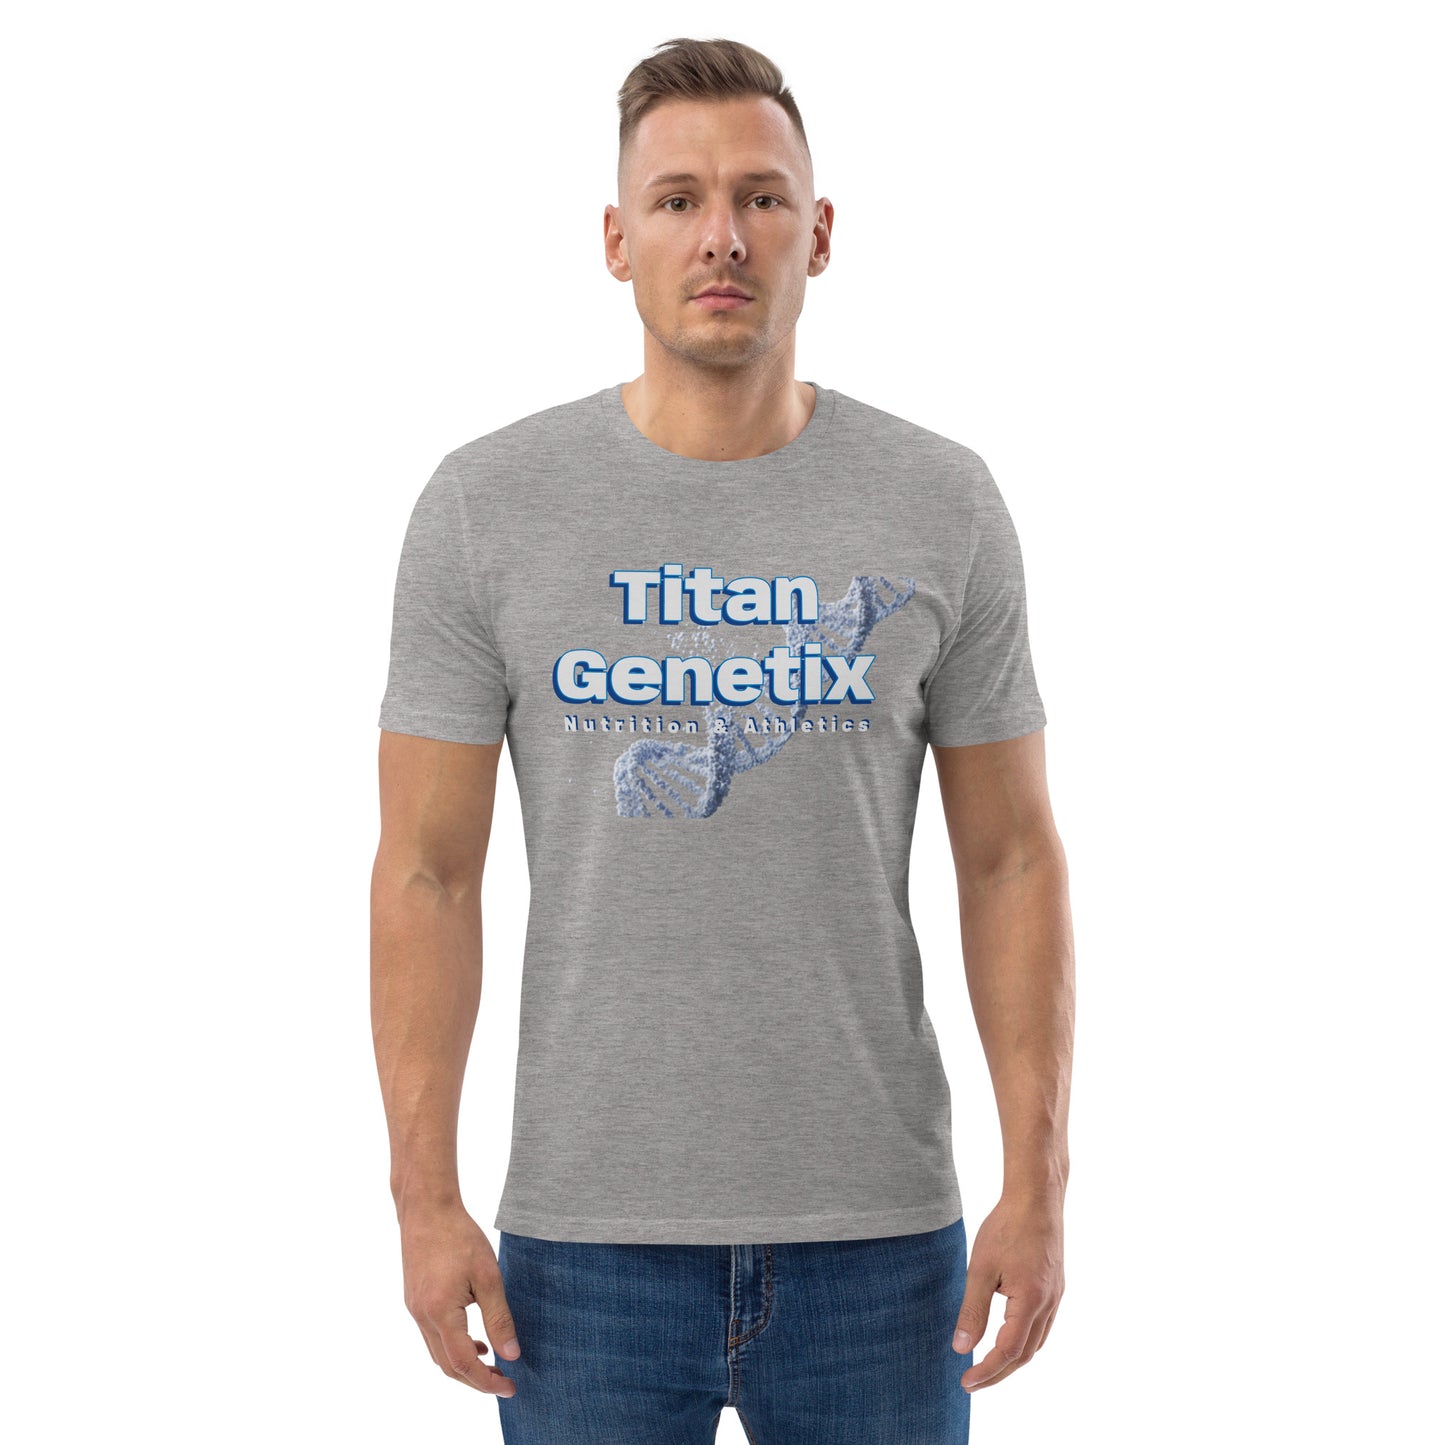 Titan Genetix DNA - Unisex Organic Cotton Tee